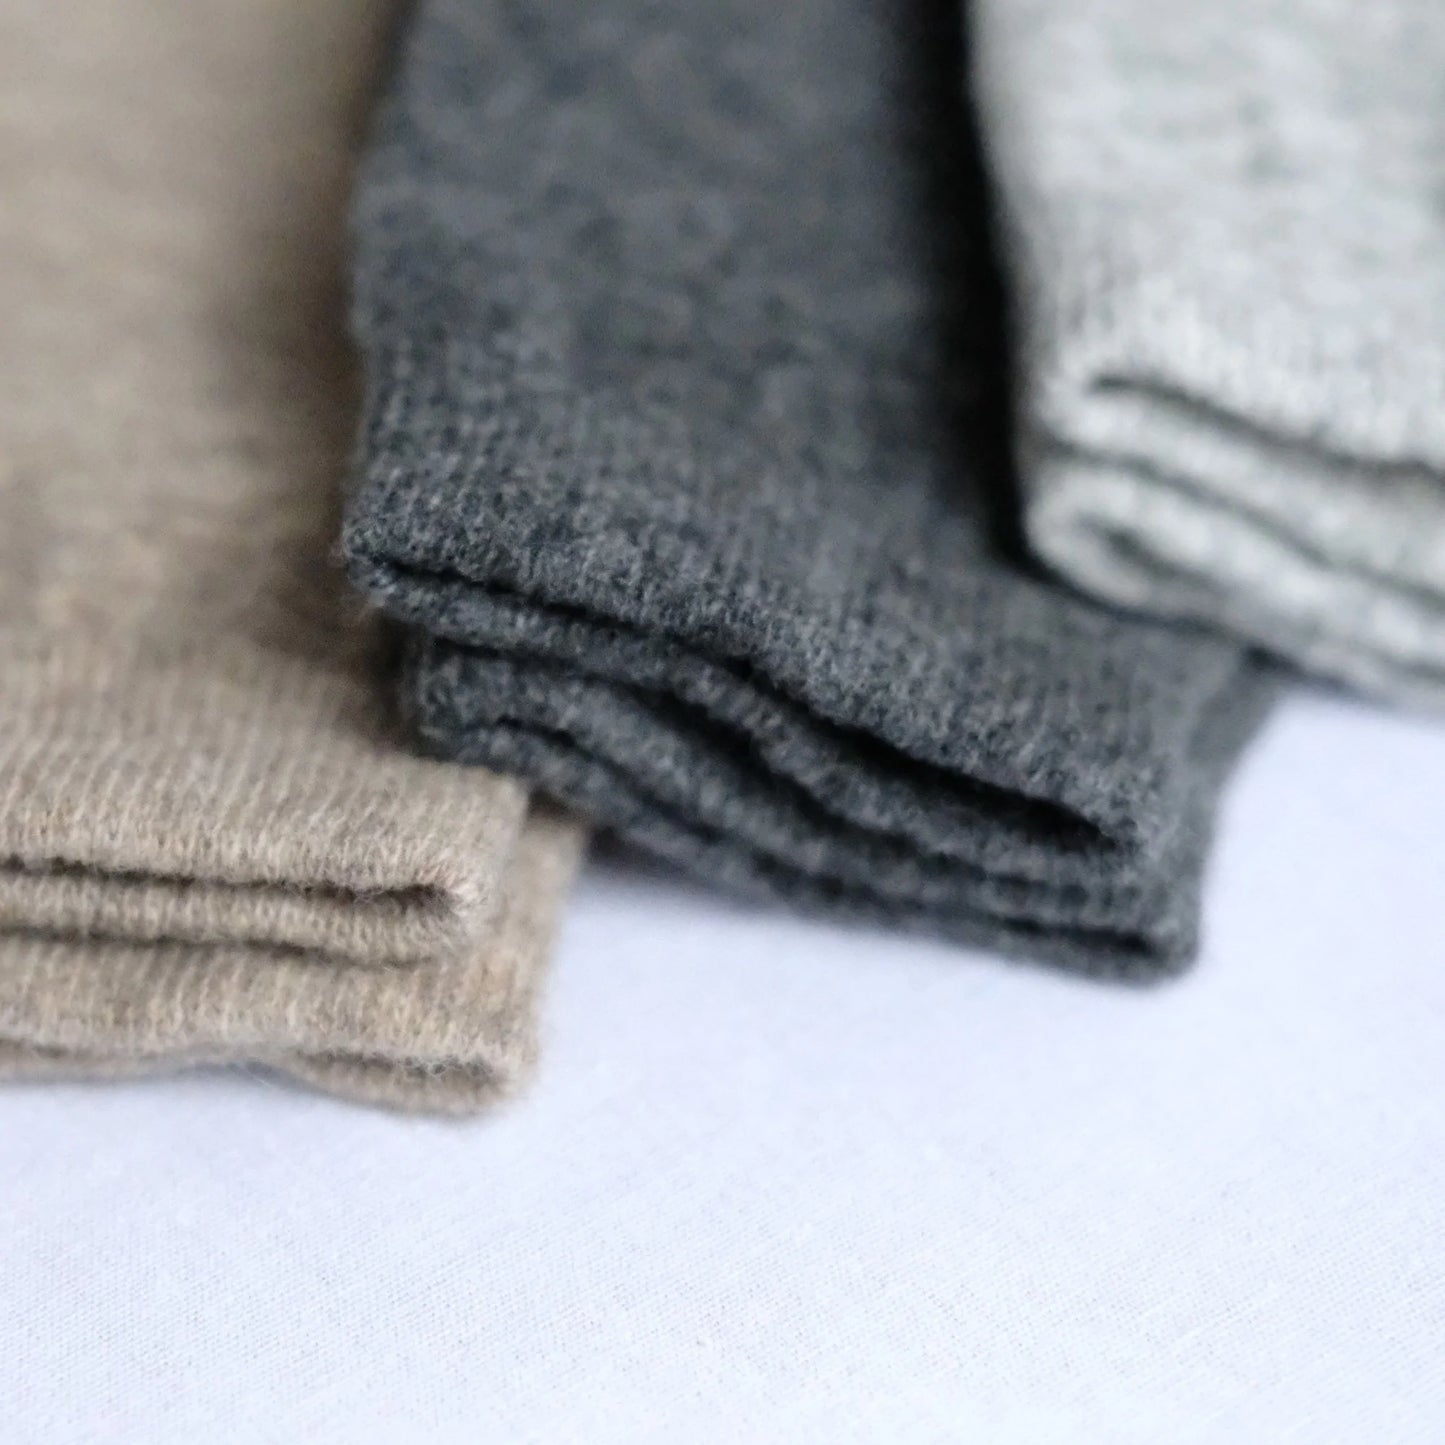 Nishiguchi Kutsushita Praha Cashmere Wool Socks Light Grey Small | Nishiguchi Kutsushita | Miss Arthur | Home Goods | Tasmania